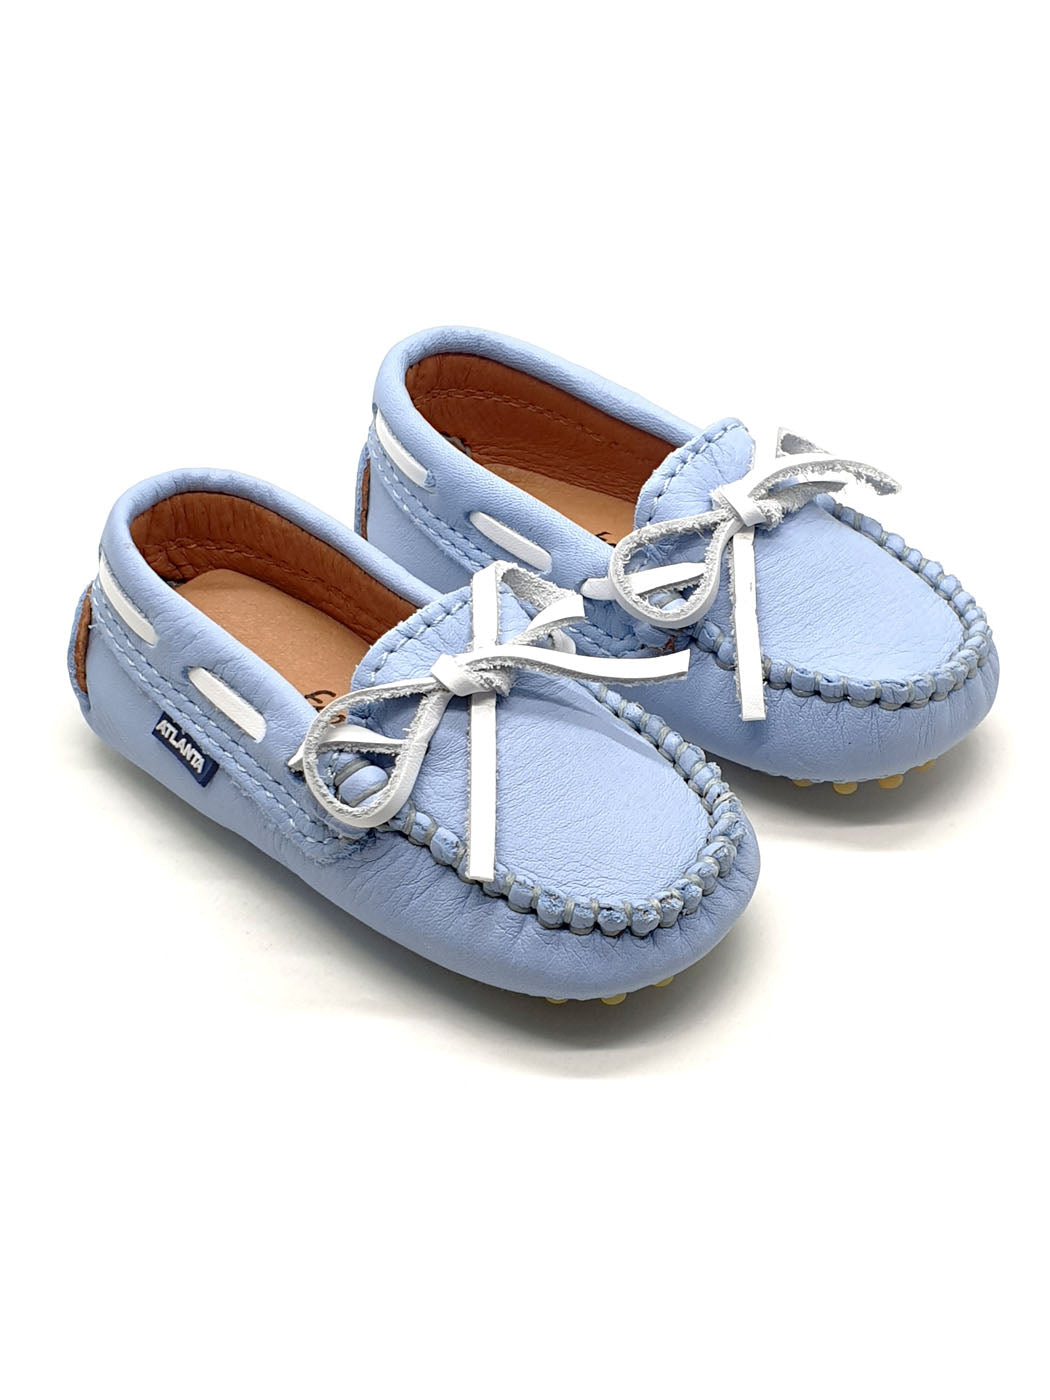 Atlanta Mocassin-Baby Shoes Moccasins Light Blue-001B002